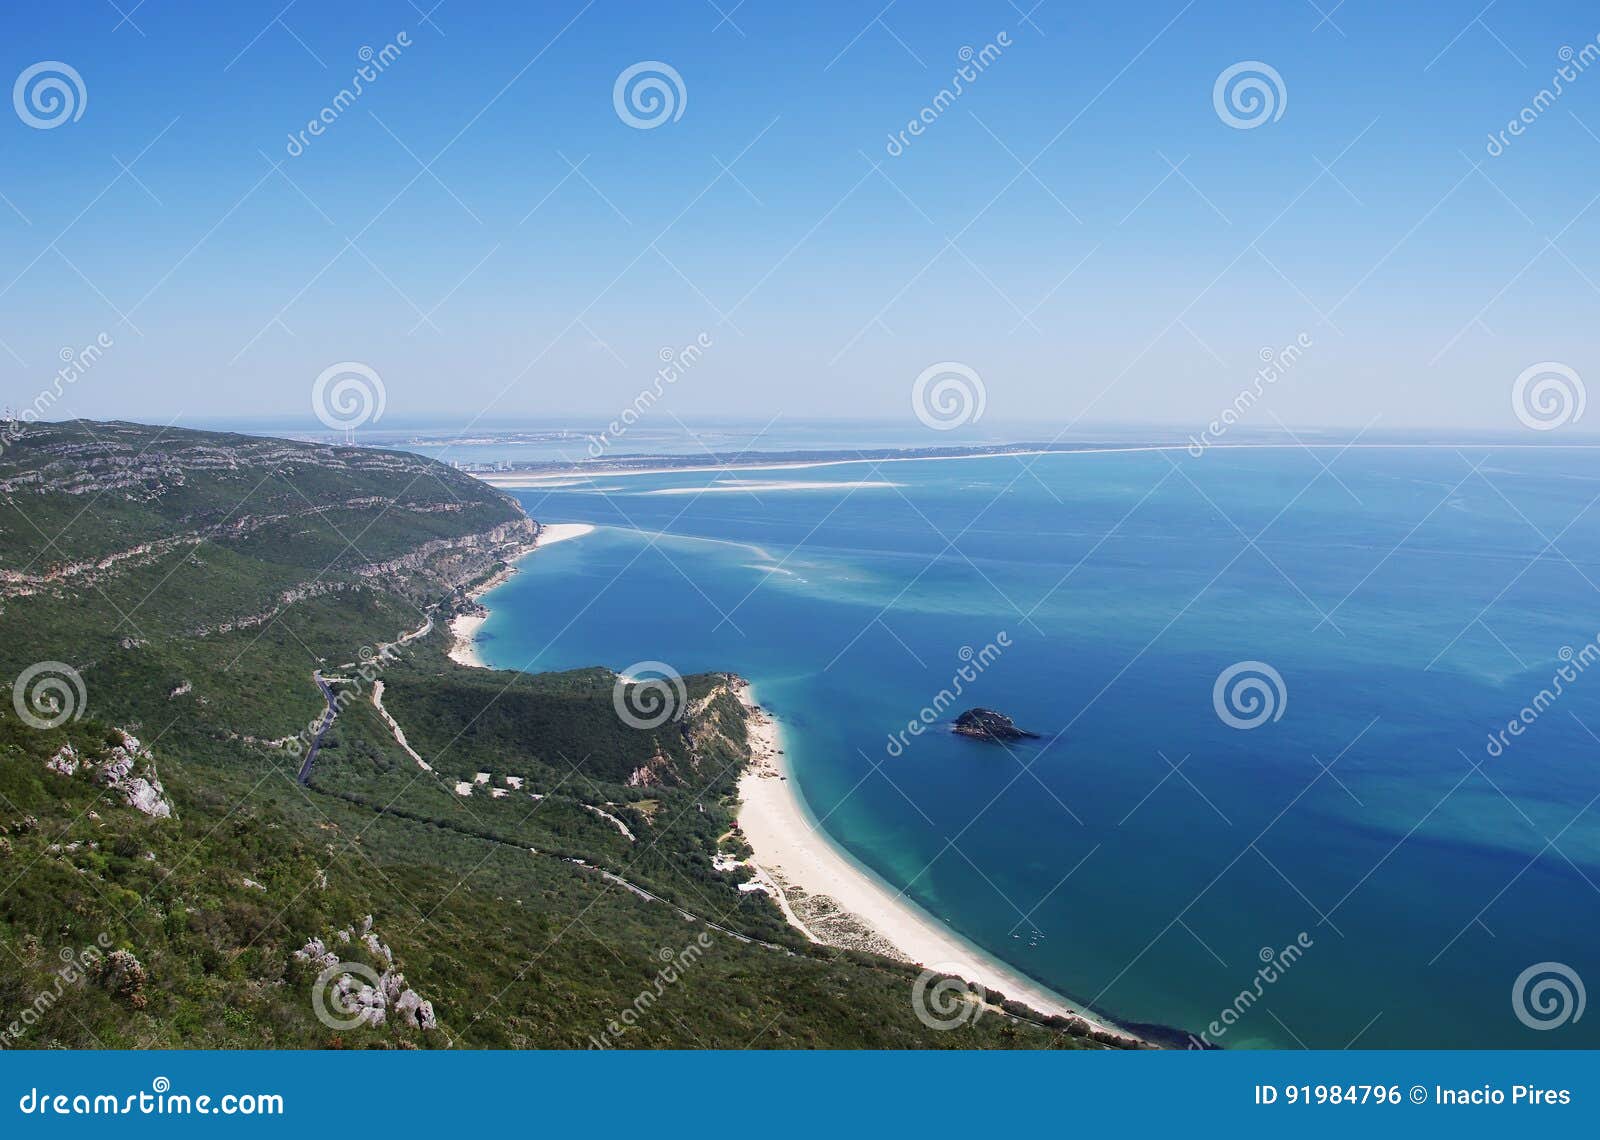 sea coastal landscape with sandy portinho beach